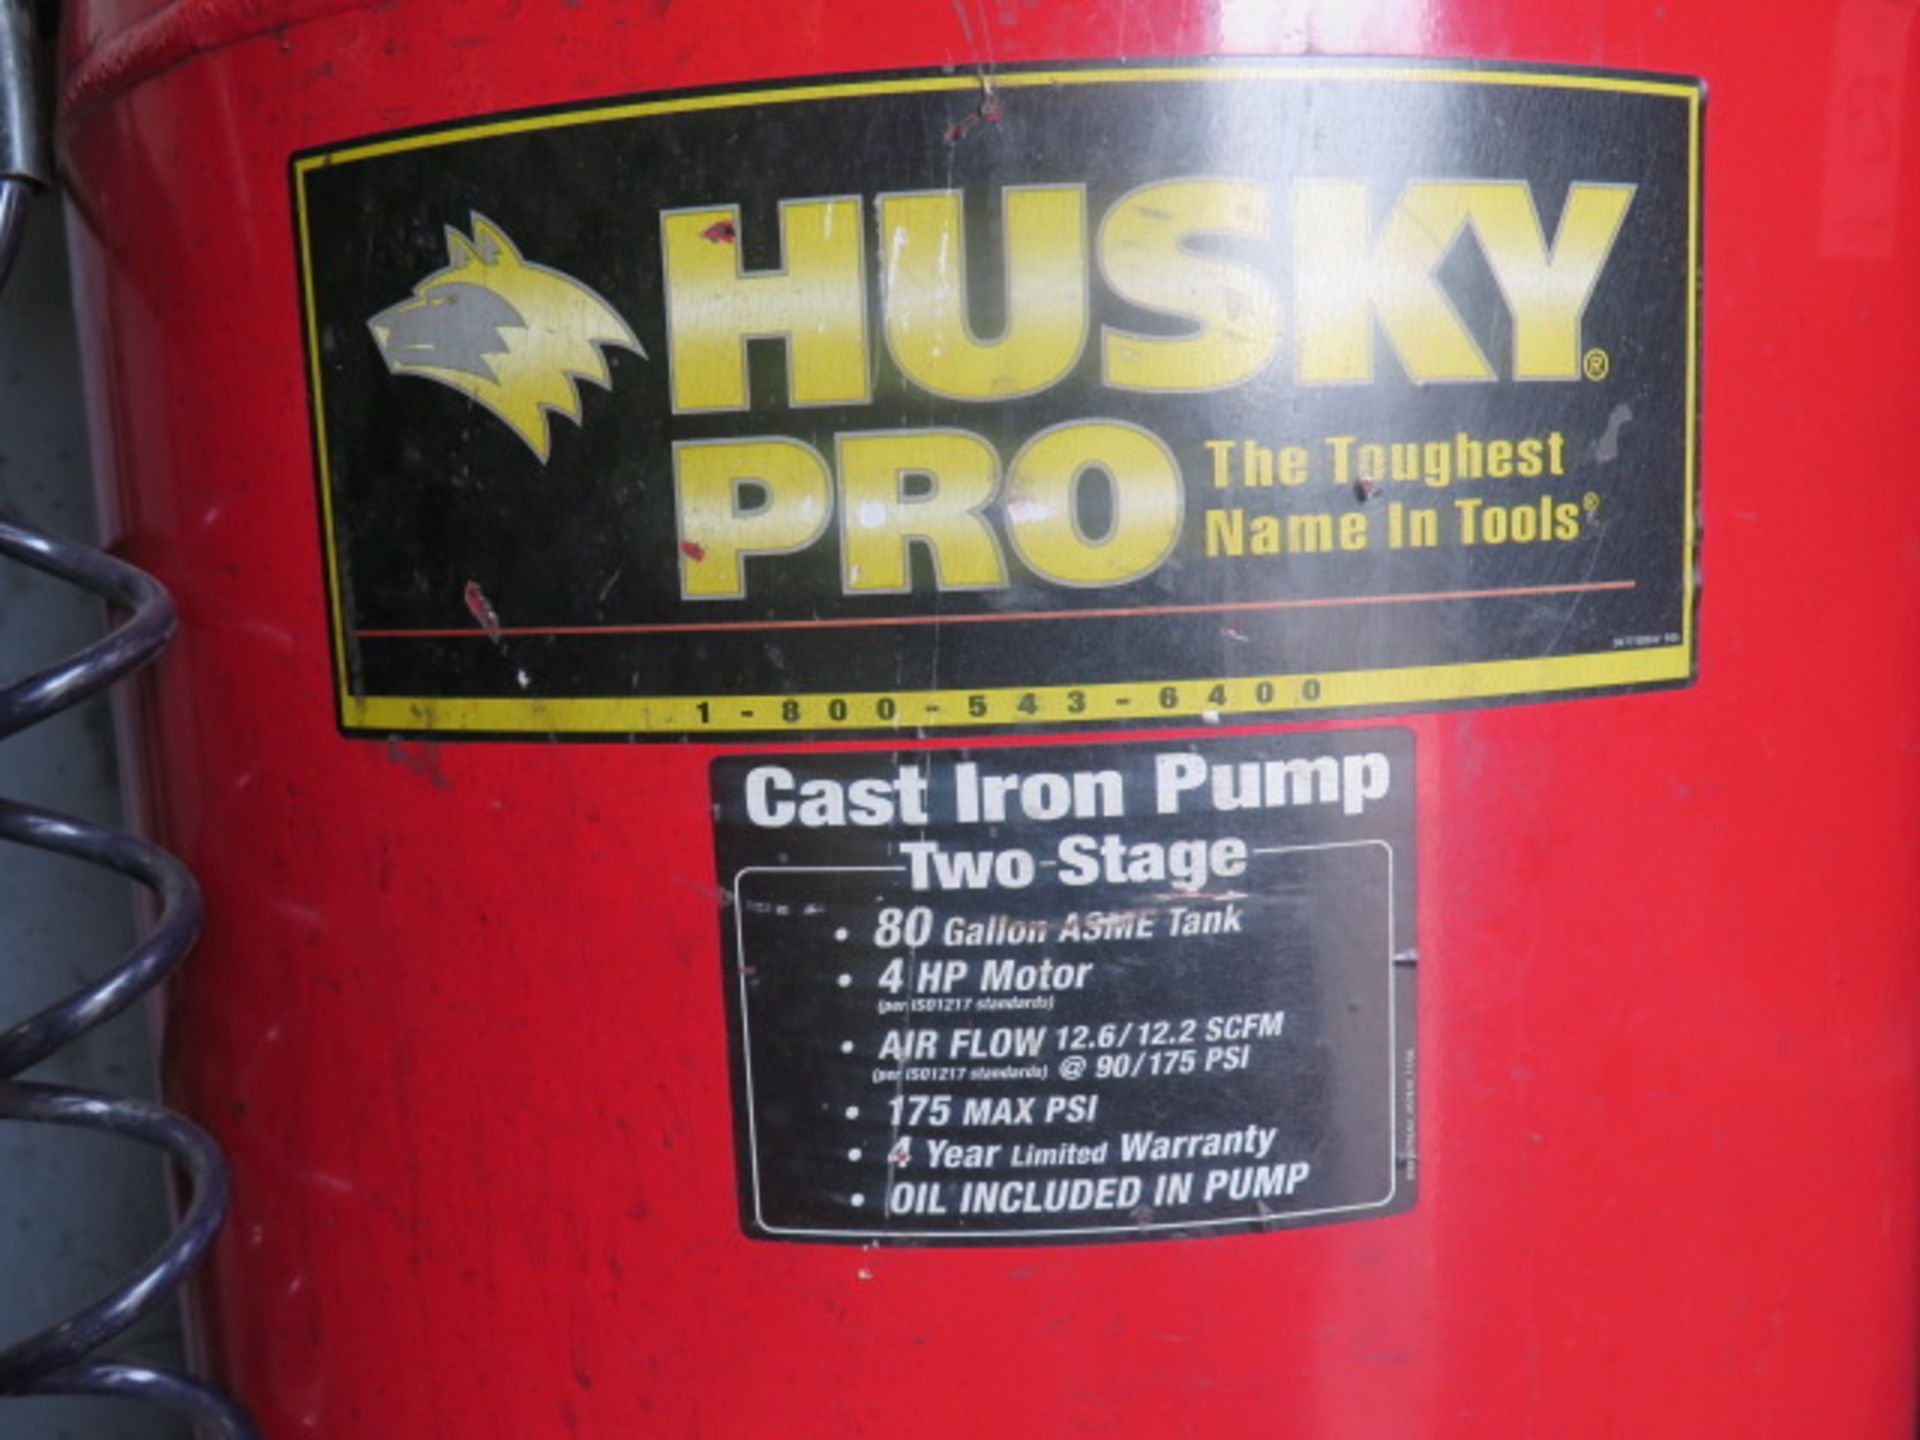 Husky Pro 4Hp Vertical Air Compressor w/ 80 Gallon Tank - Image 4 of 4